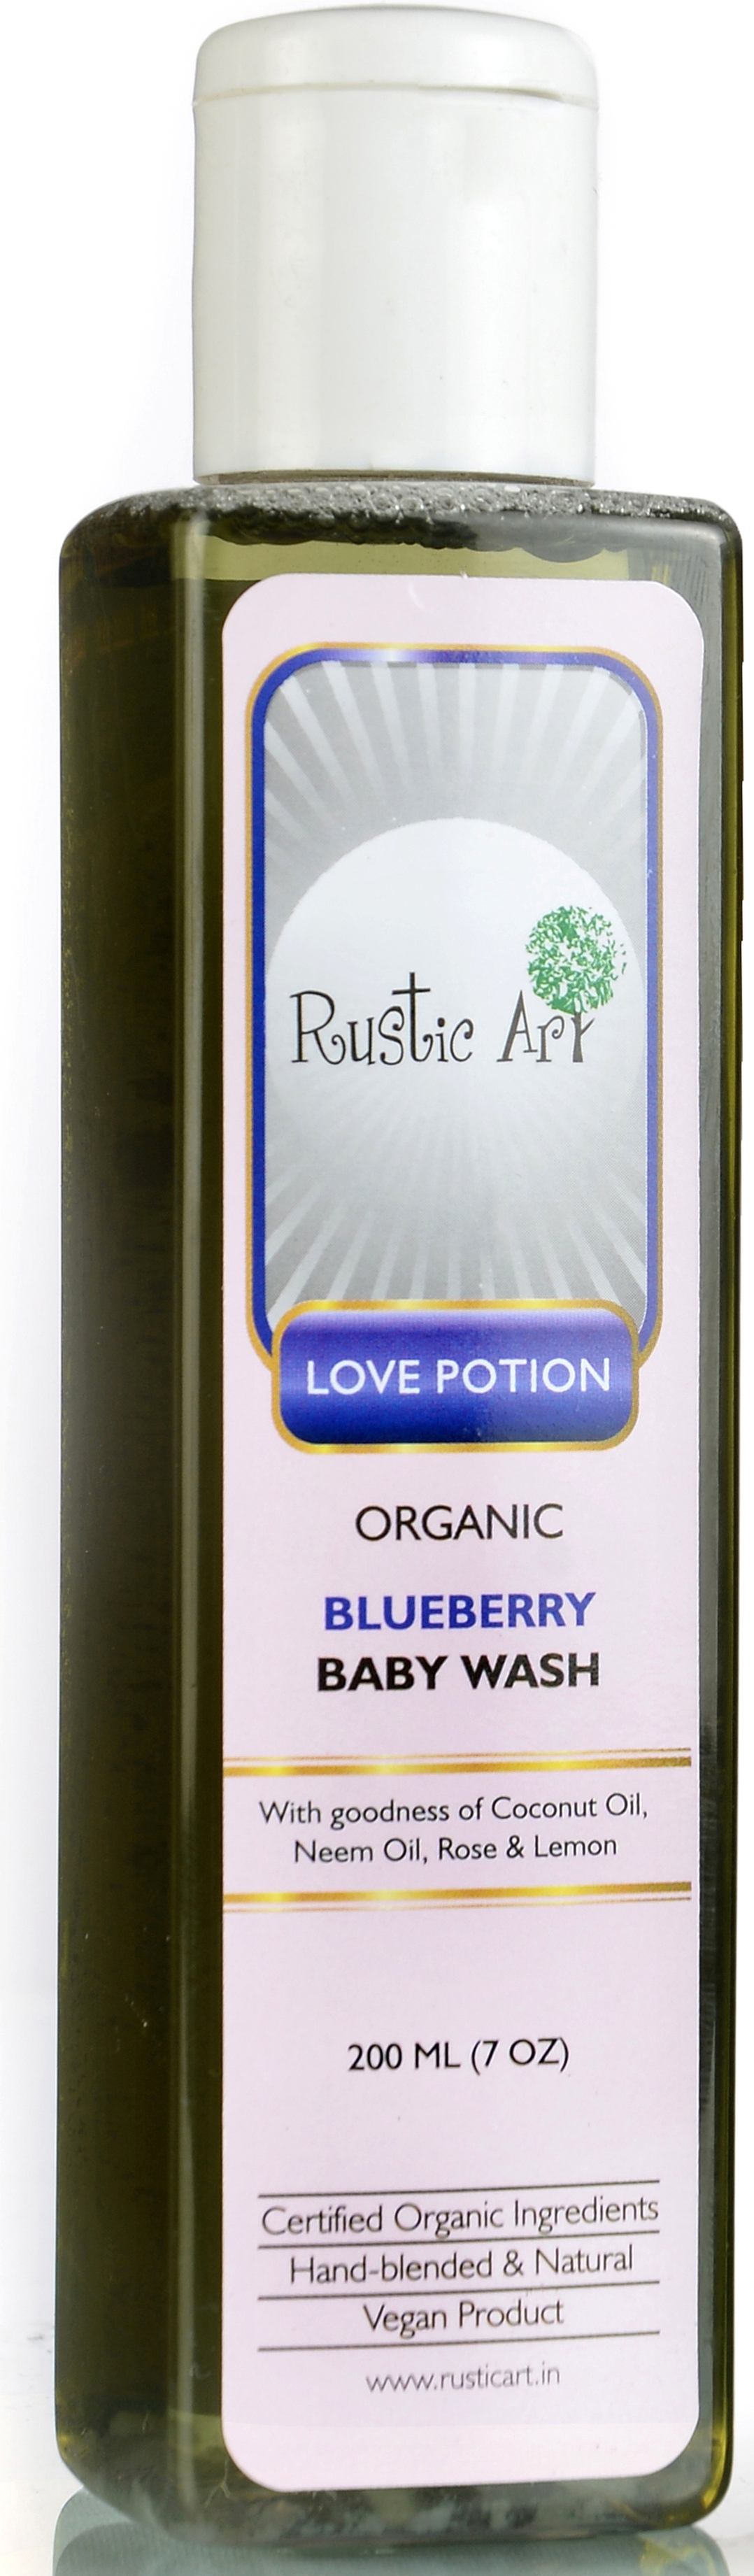 Rustic Art Organic Blueberry Baby Wash 